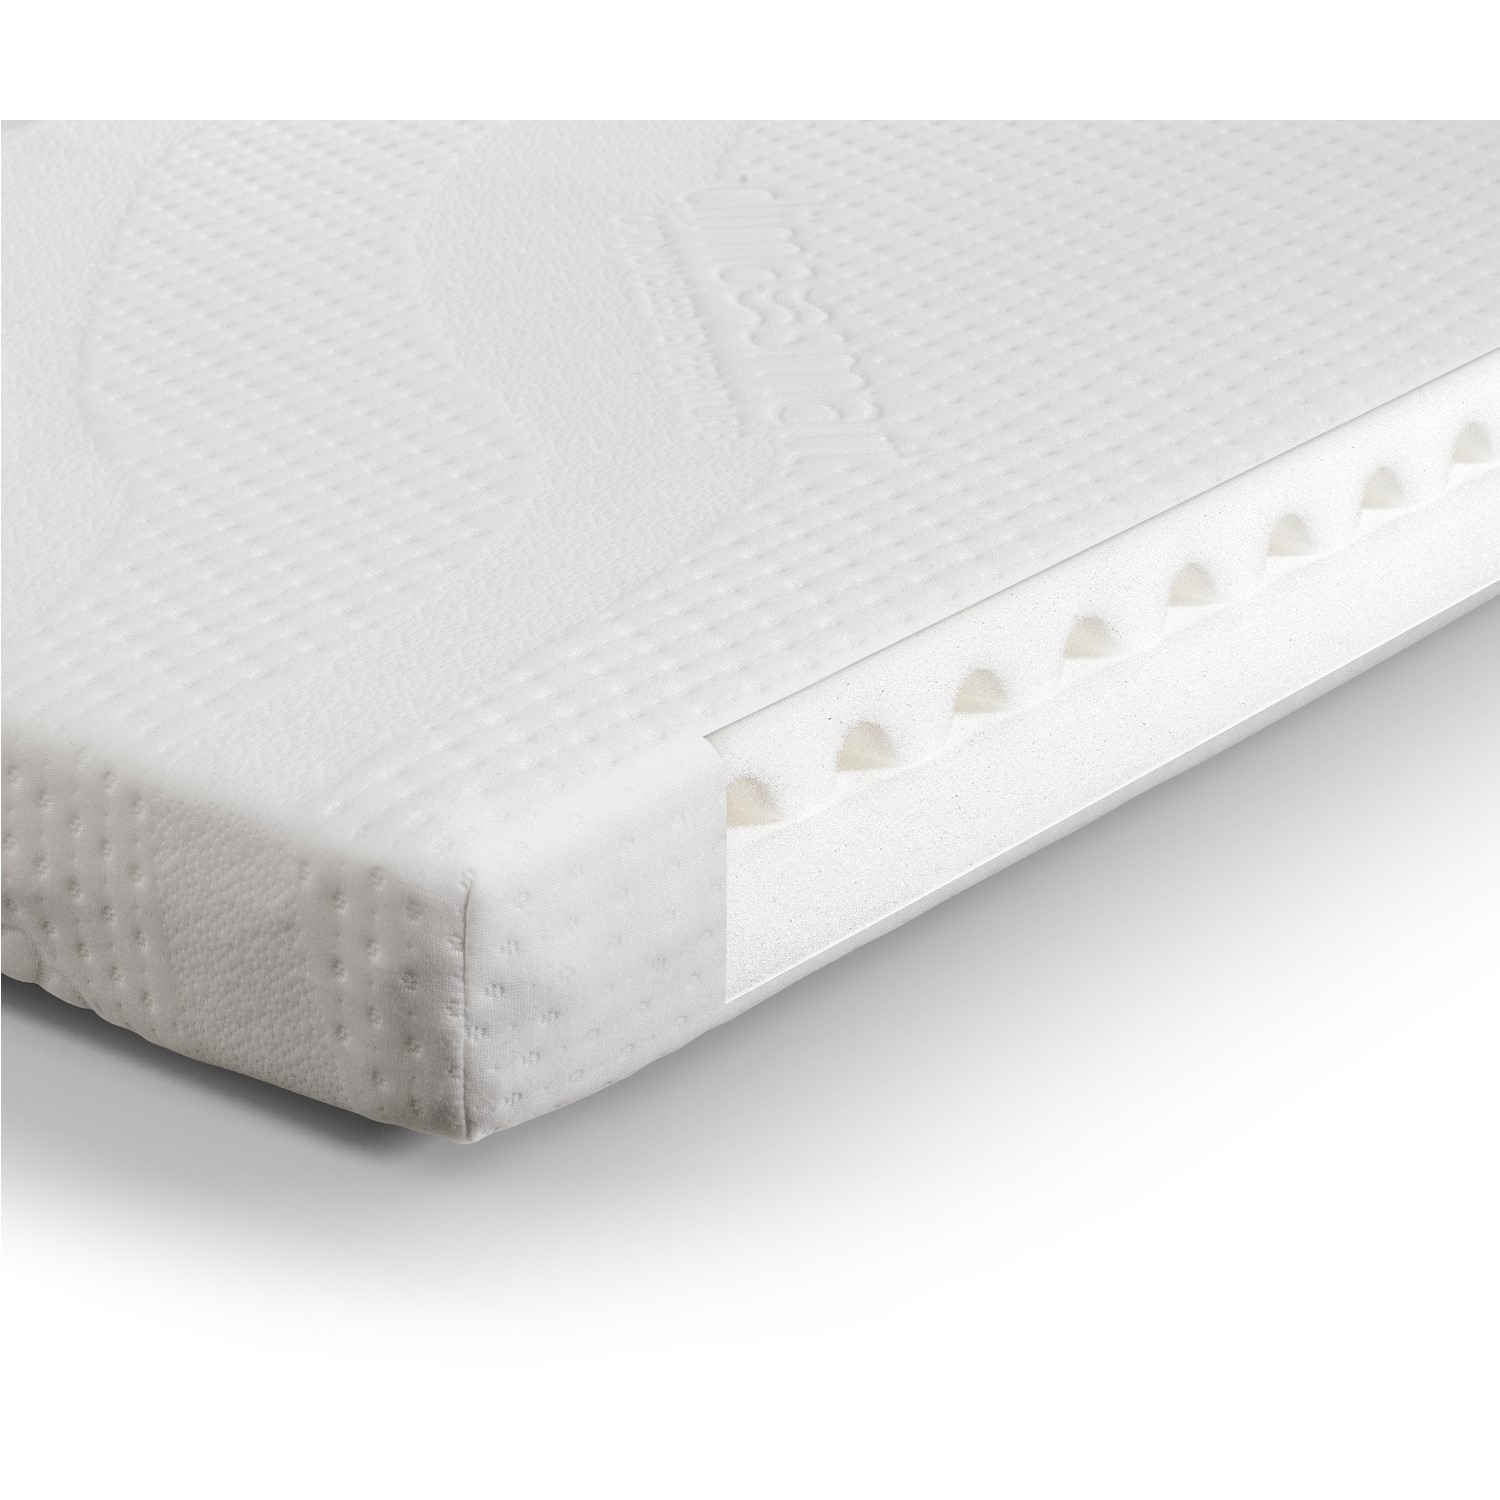 Julian bowen air wave foam cotbed mattress with clima smart cover